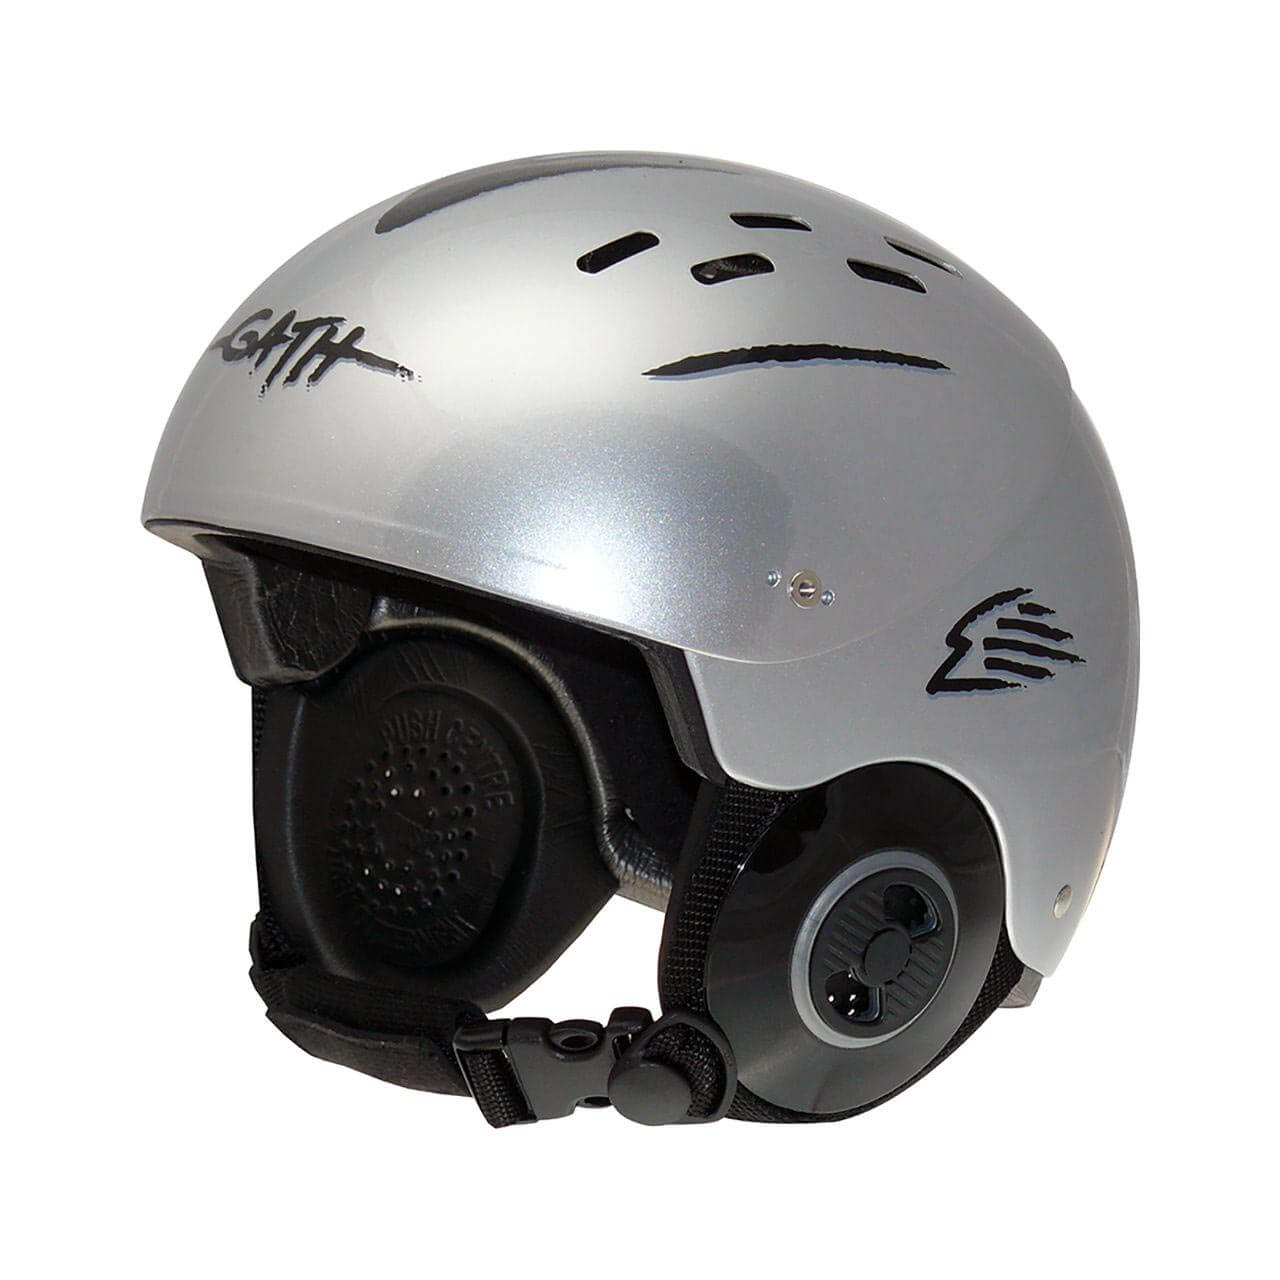 Gath Gedi Surf Safety Helmet with Peak 